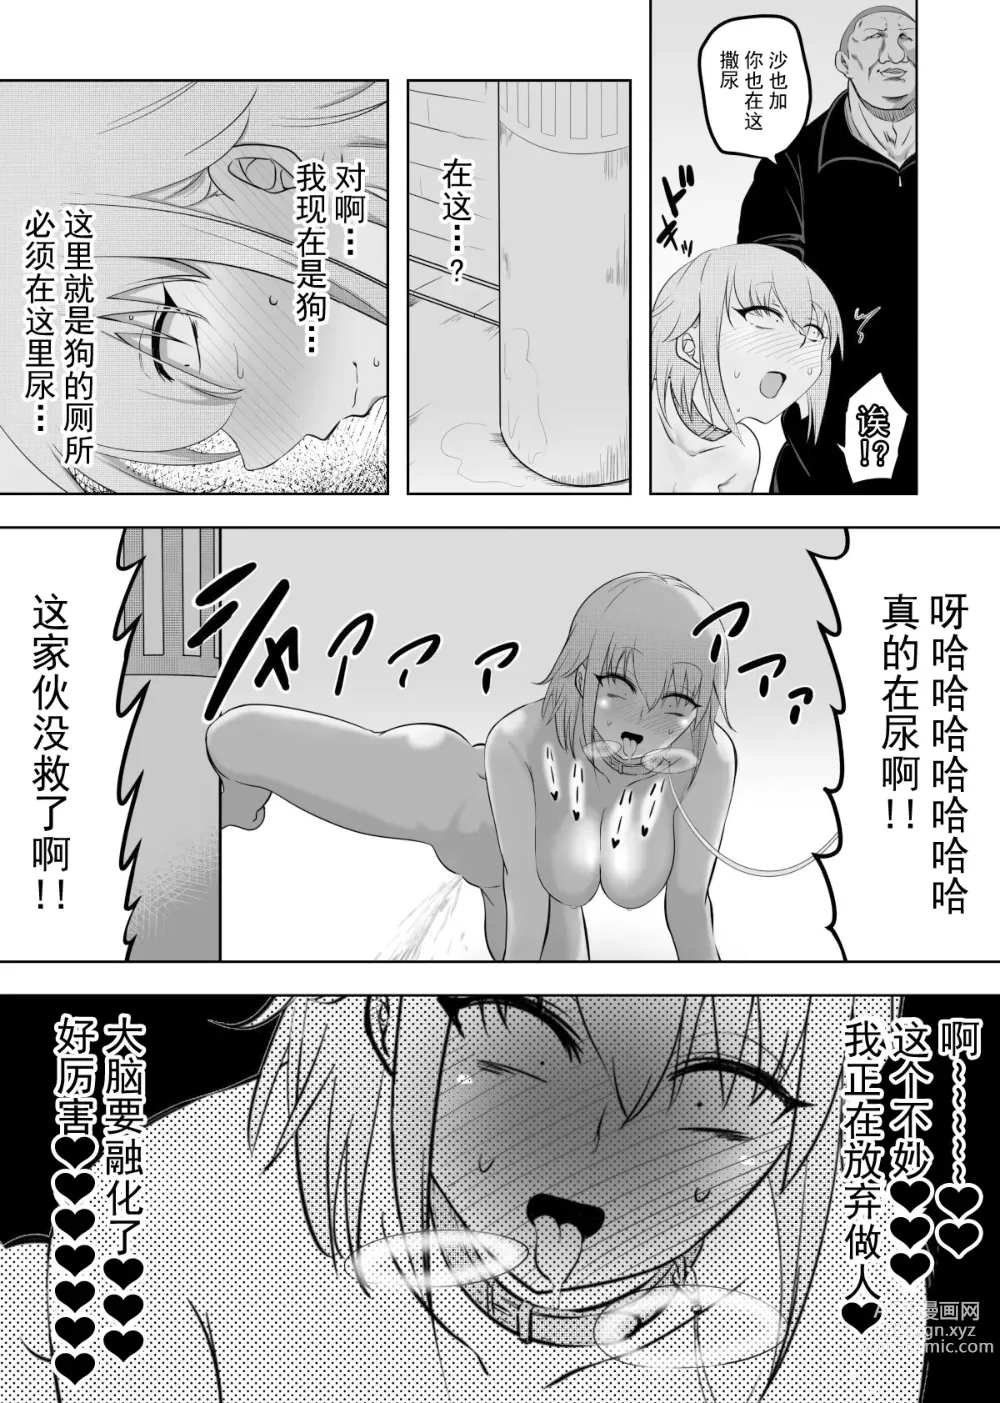 Page 27 of doujinshi 老婆的愿望名为毁灭